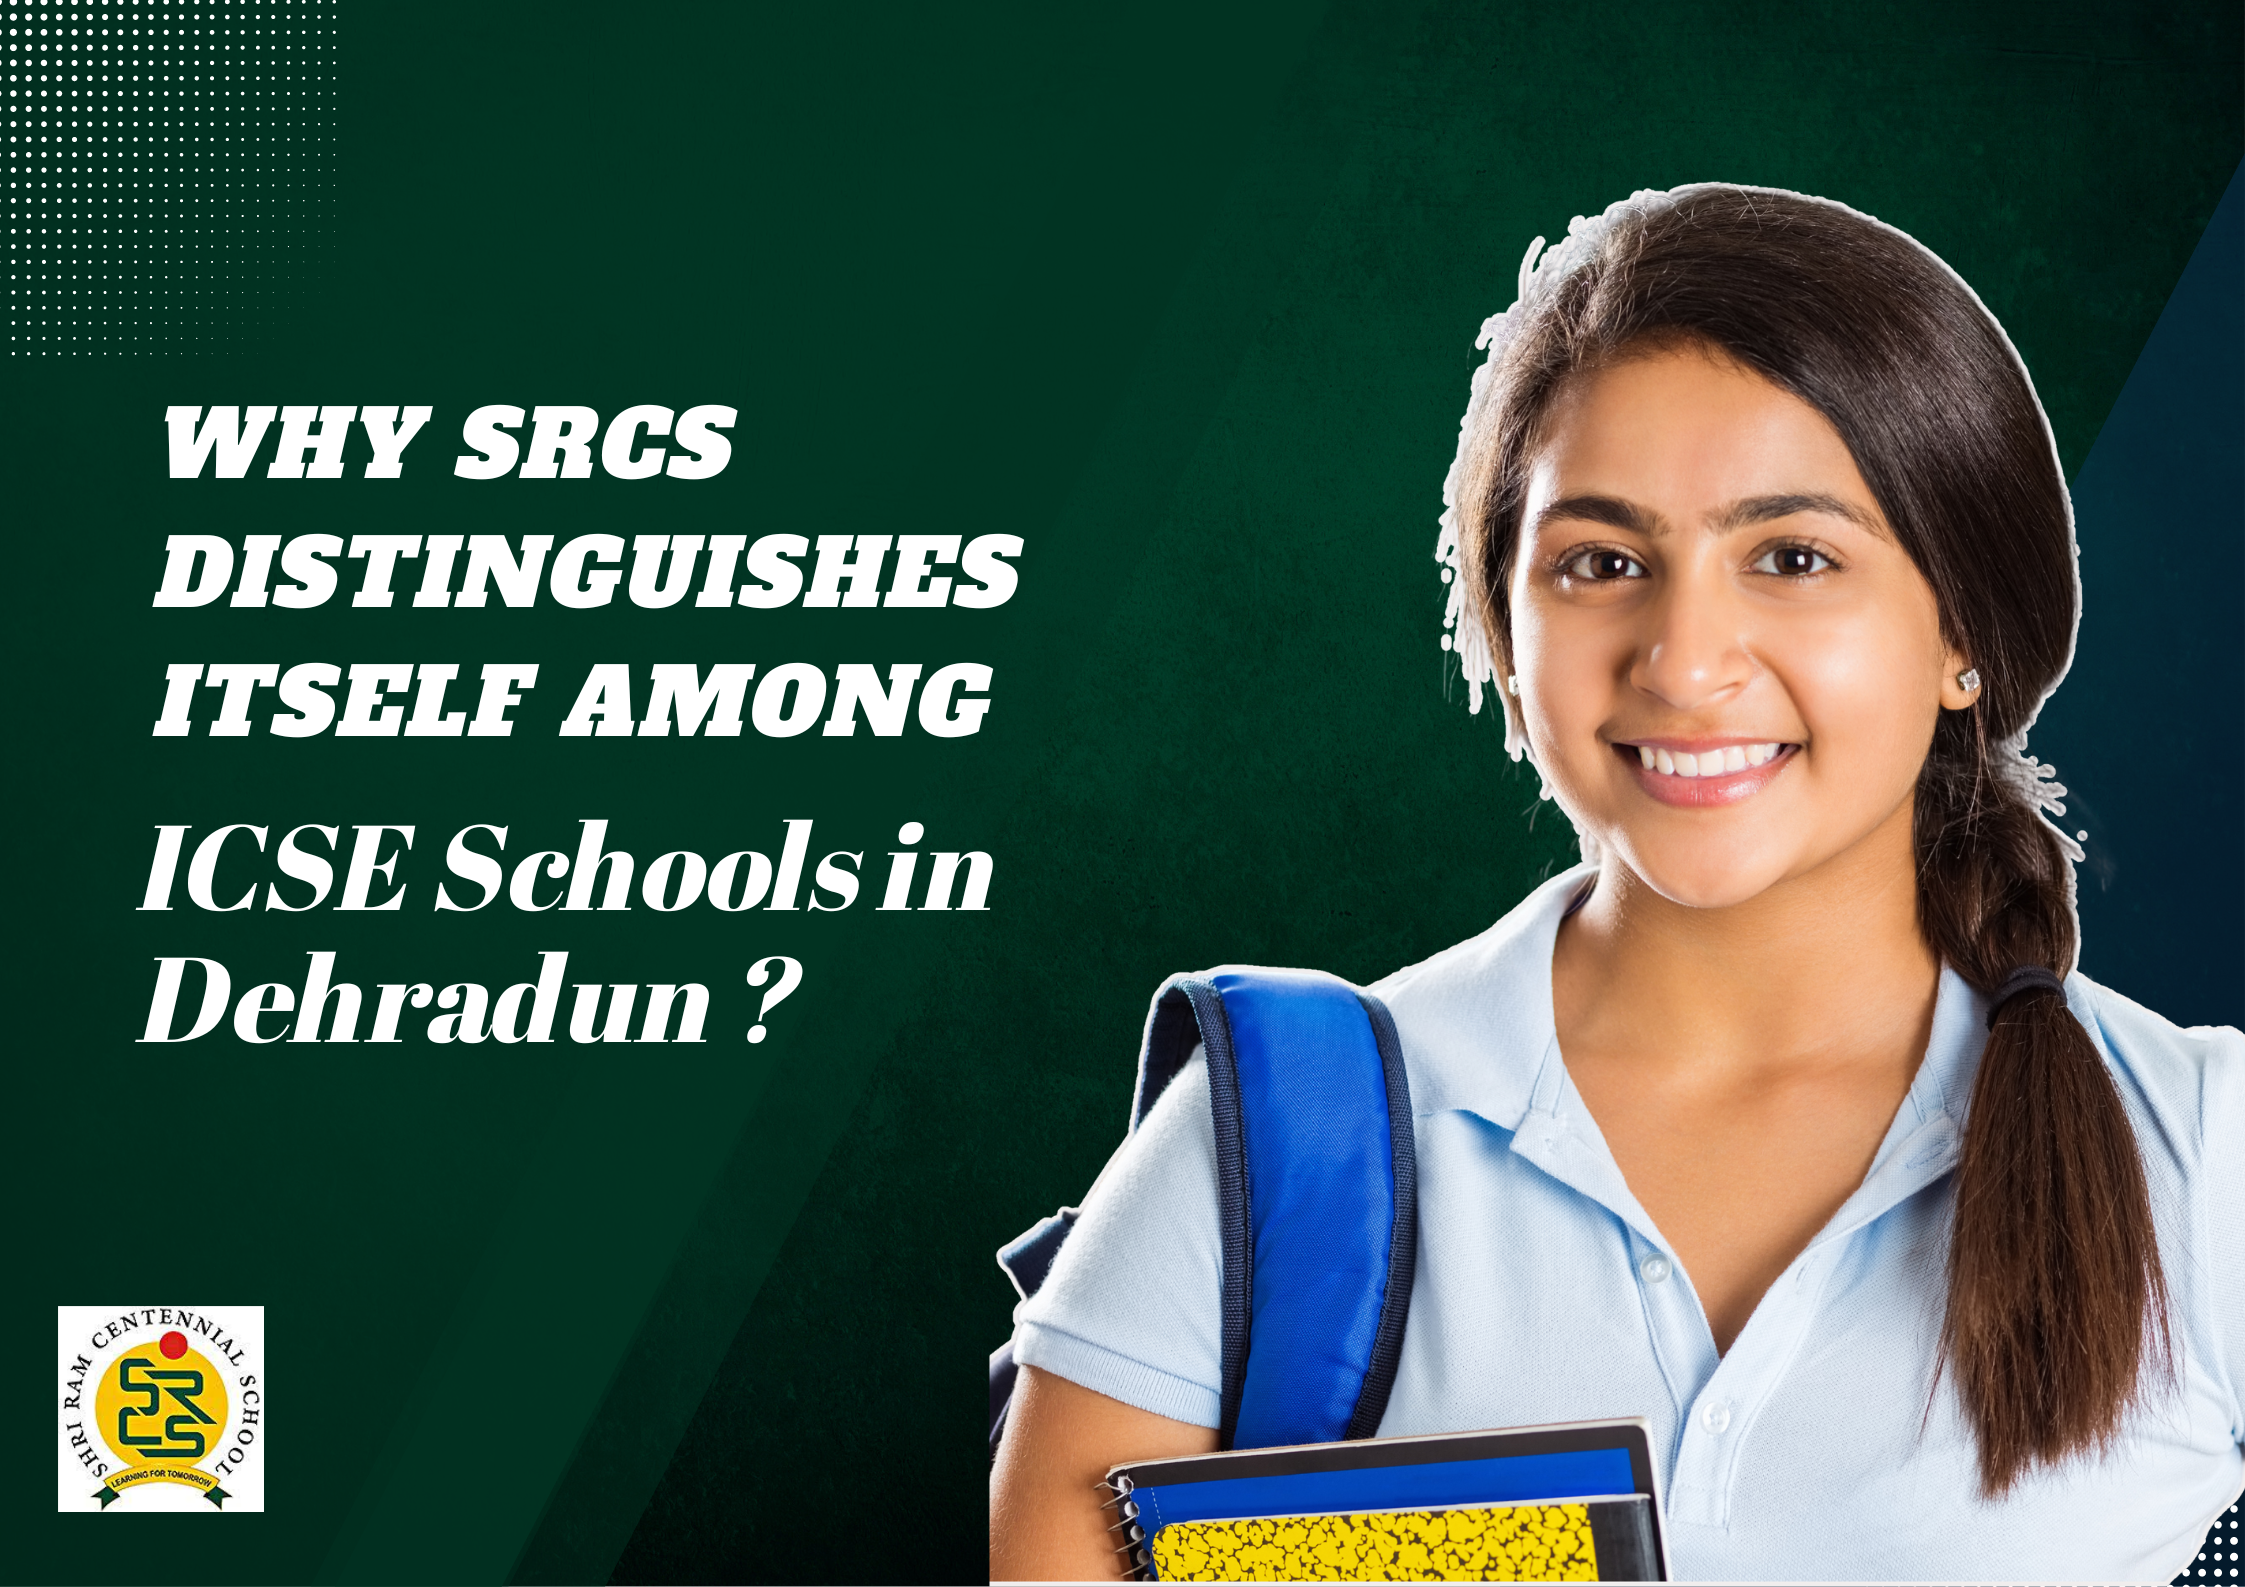 Why Shri Ram Centennial School Distinguishes Itself Among ICSE Schools in Dehradun